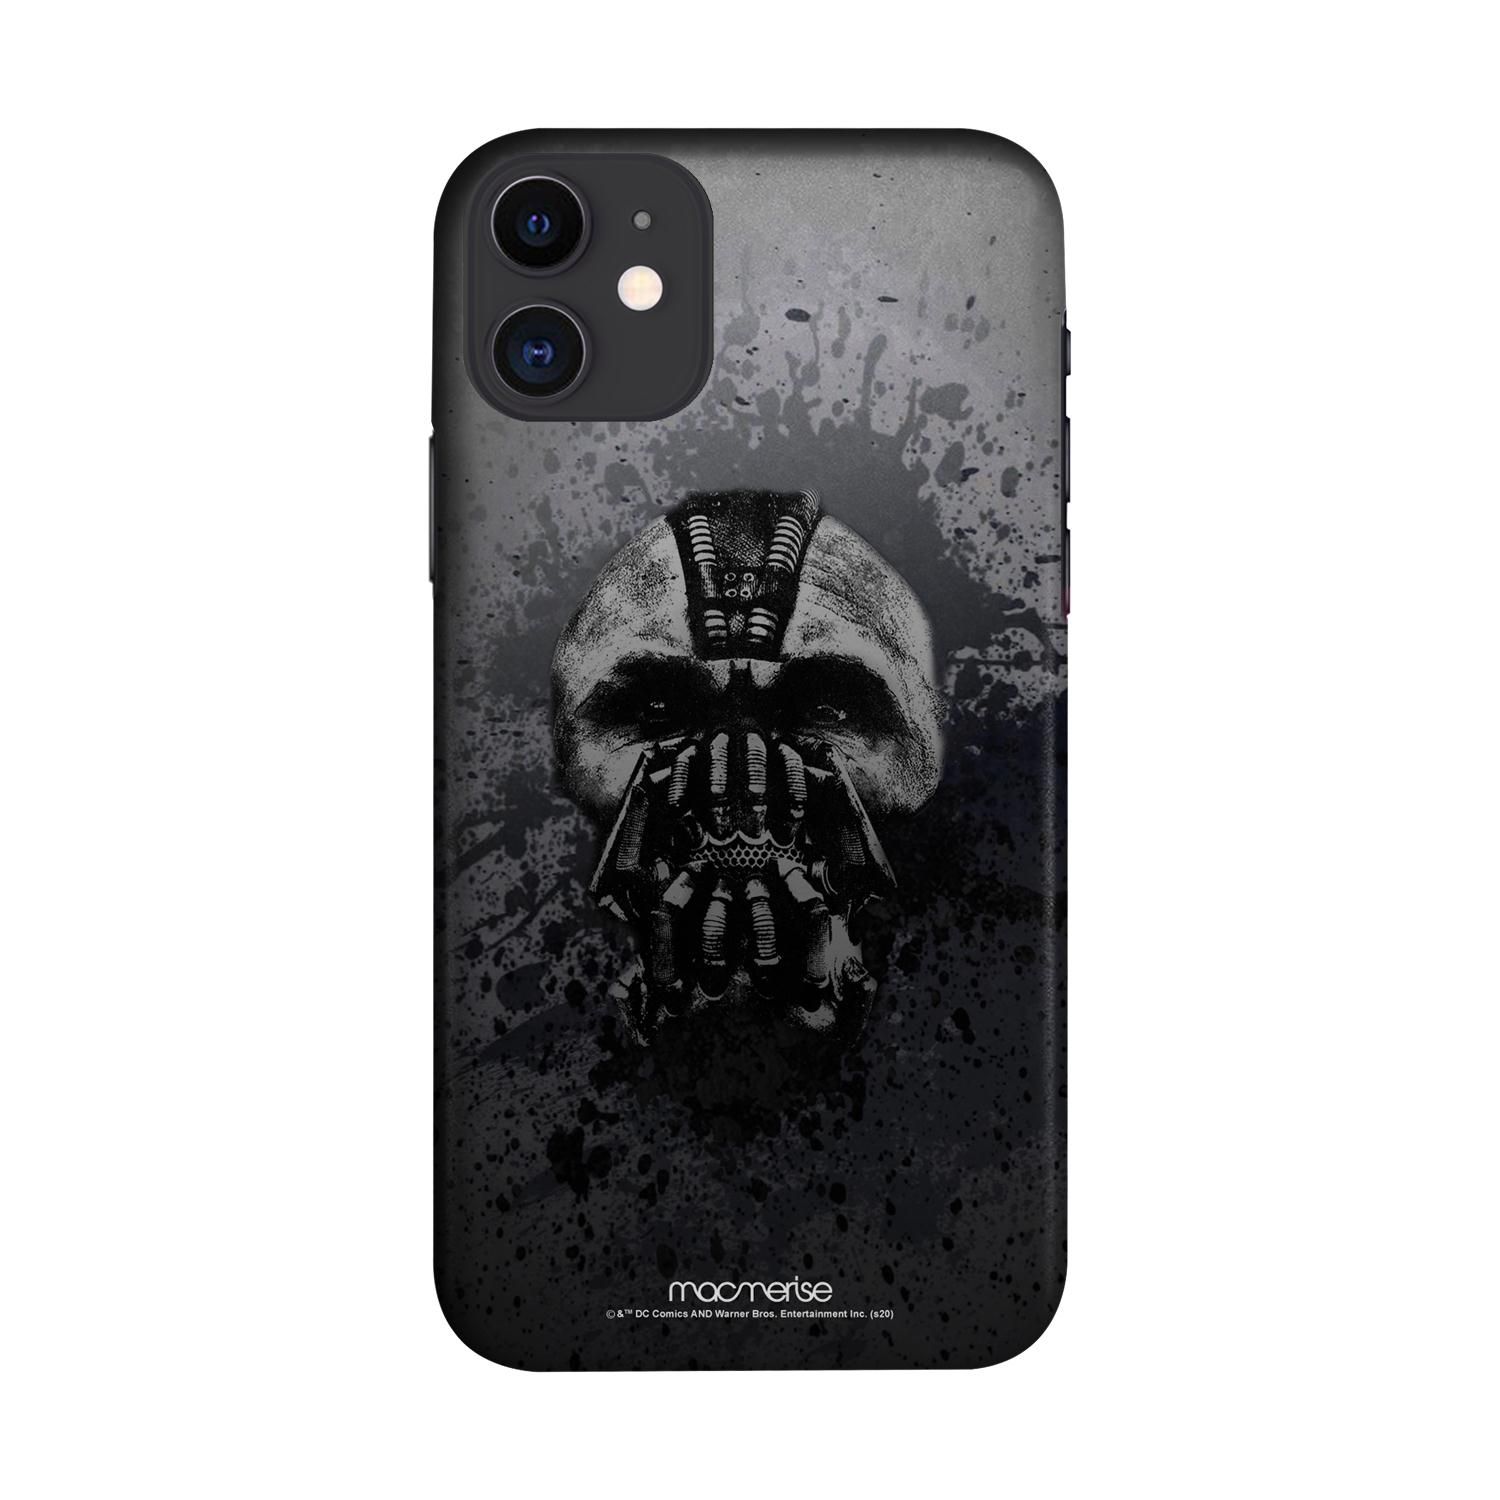 Buy Bane is Watching - Sleek Phone Case for iPhone 11 Online